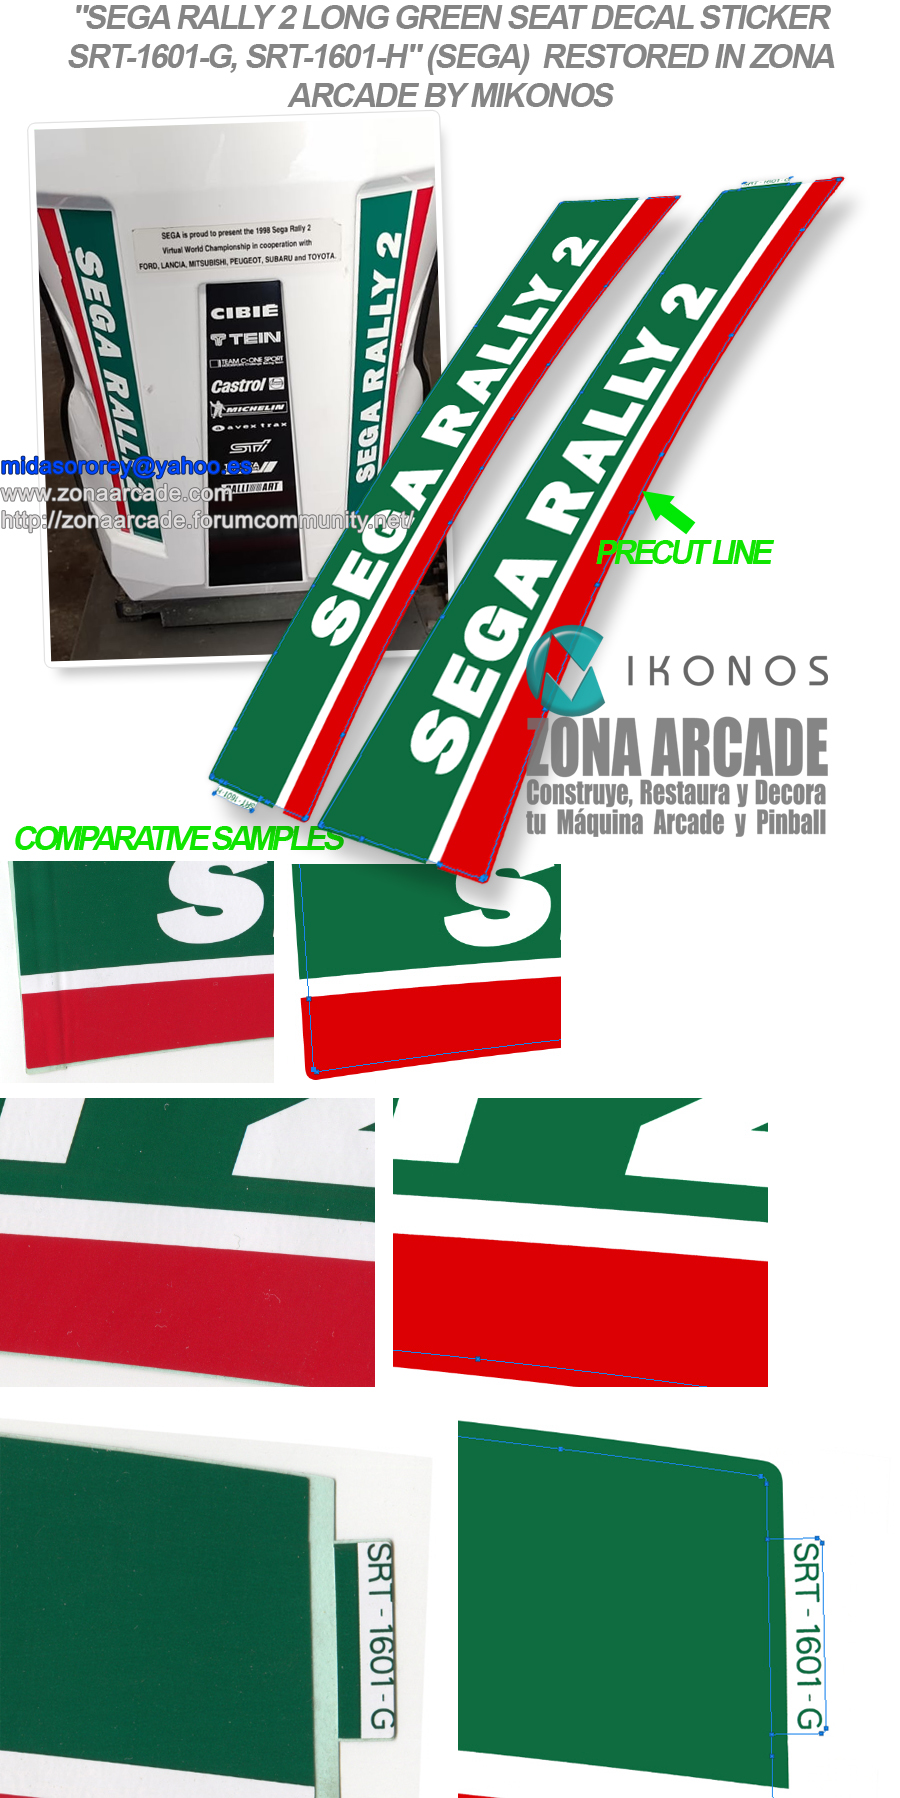 Sega-Rally-2-Long-Green-Seat-Stickers-Restored-Mikonos1